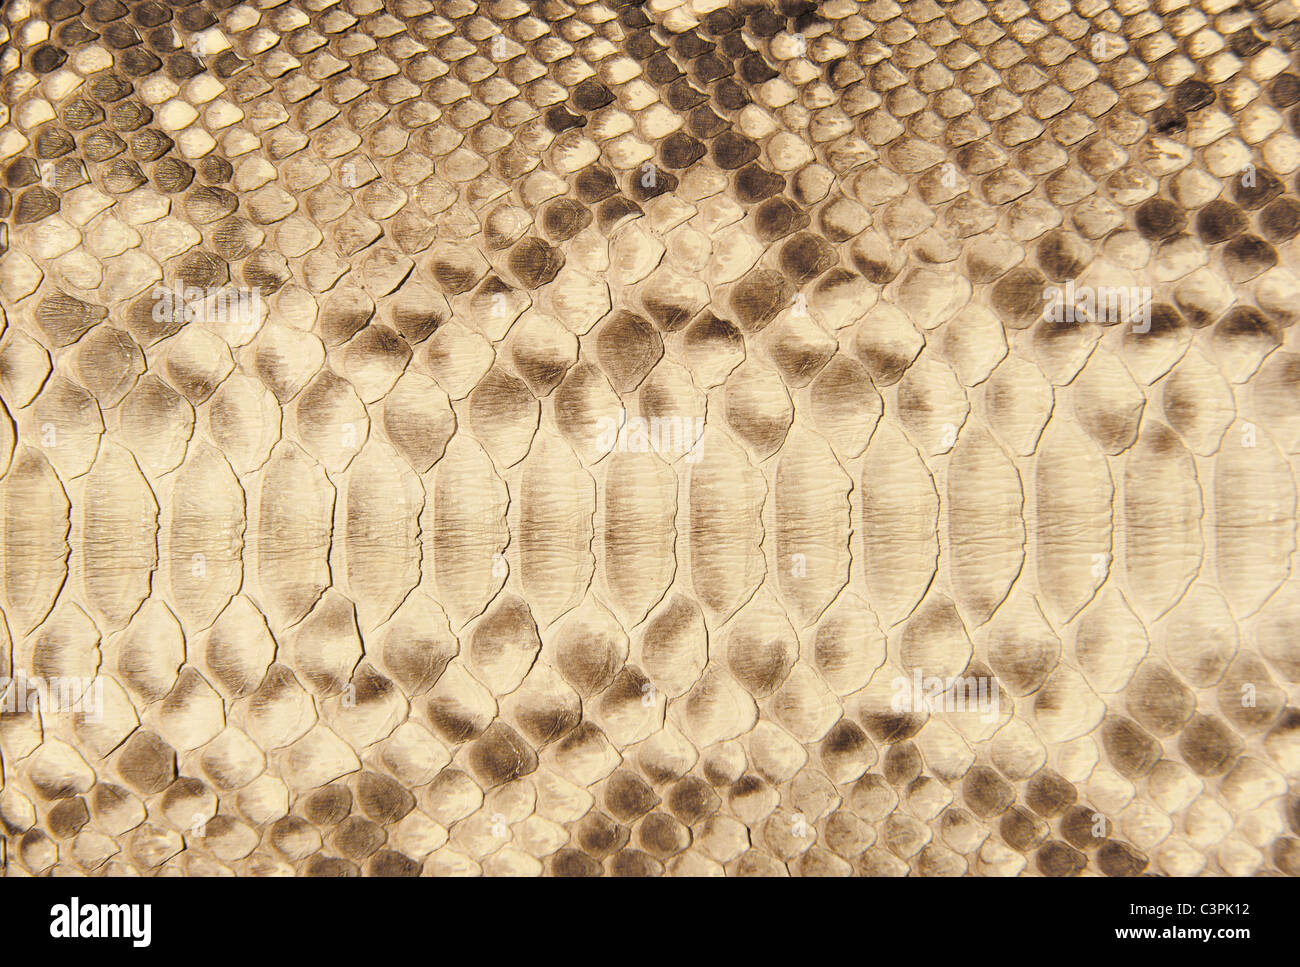 Portrait of snake skin. Up close. Stock Photo